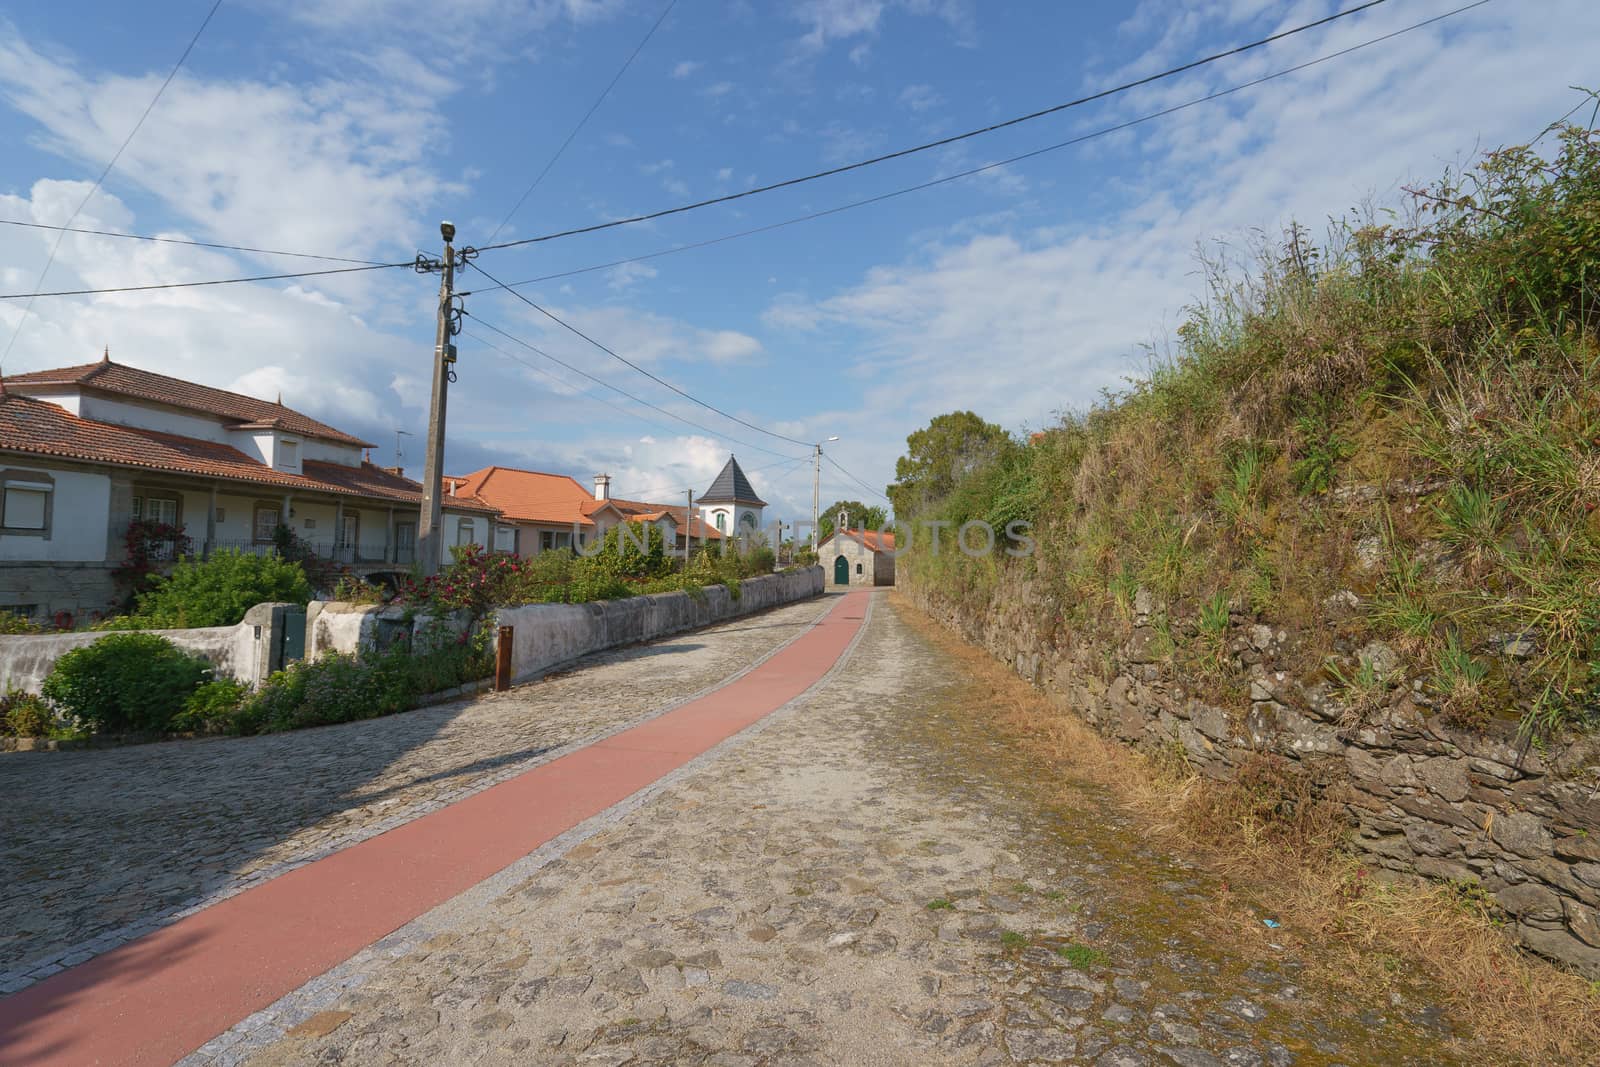 The bike lane in the northern Portugal